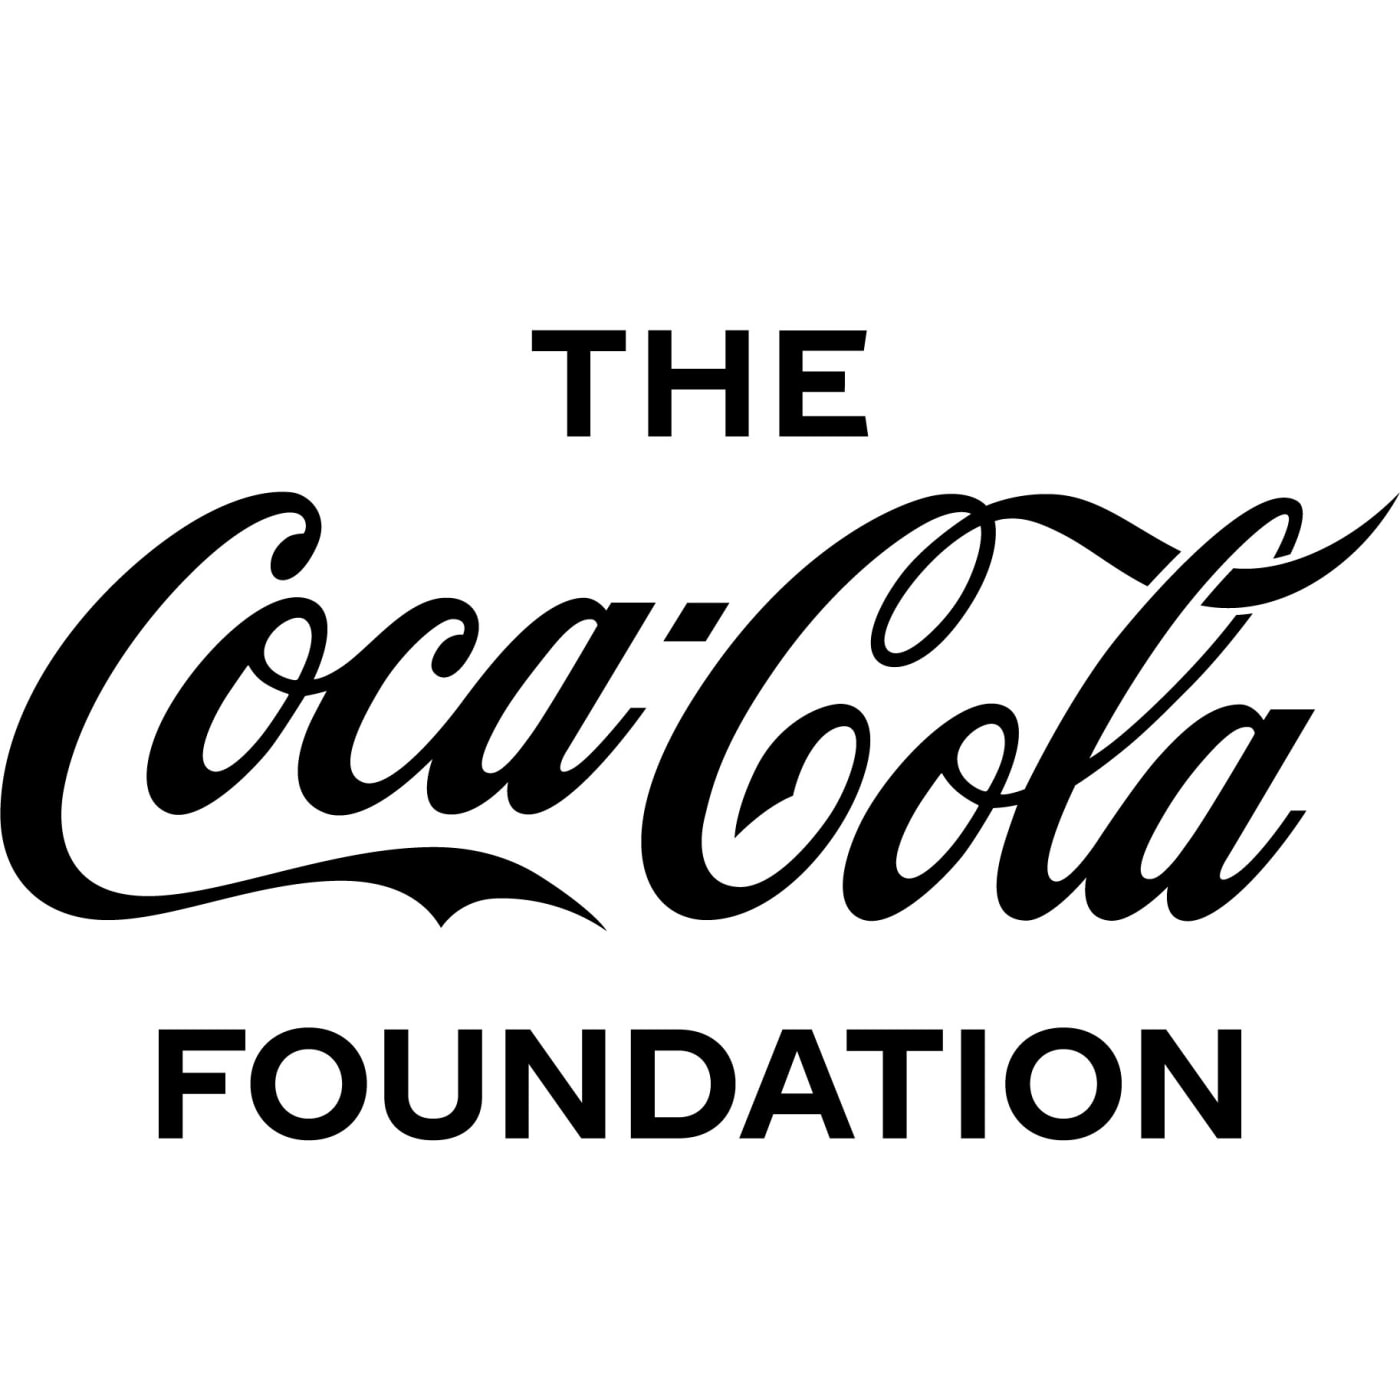 Coca Cola Foundation logo